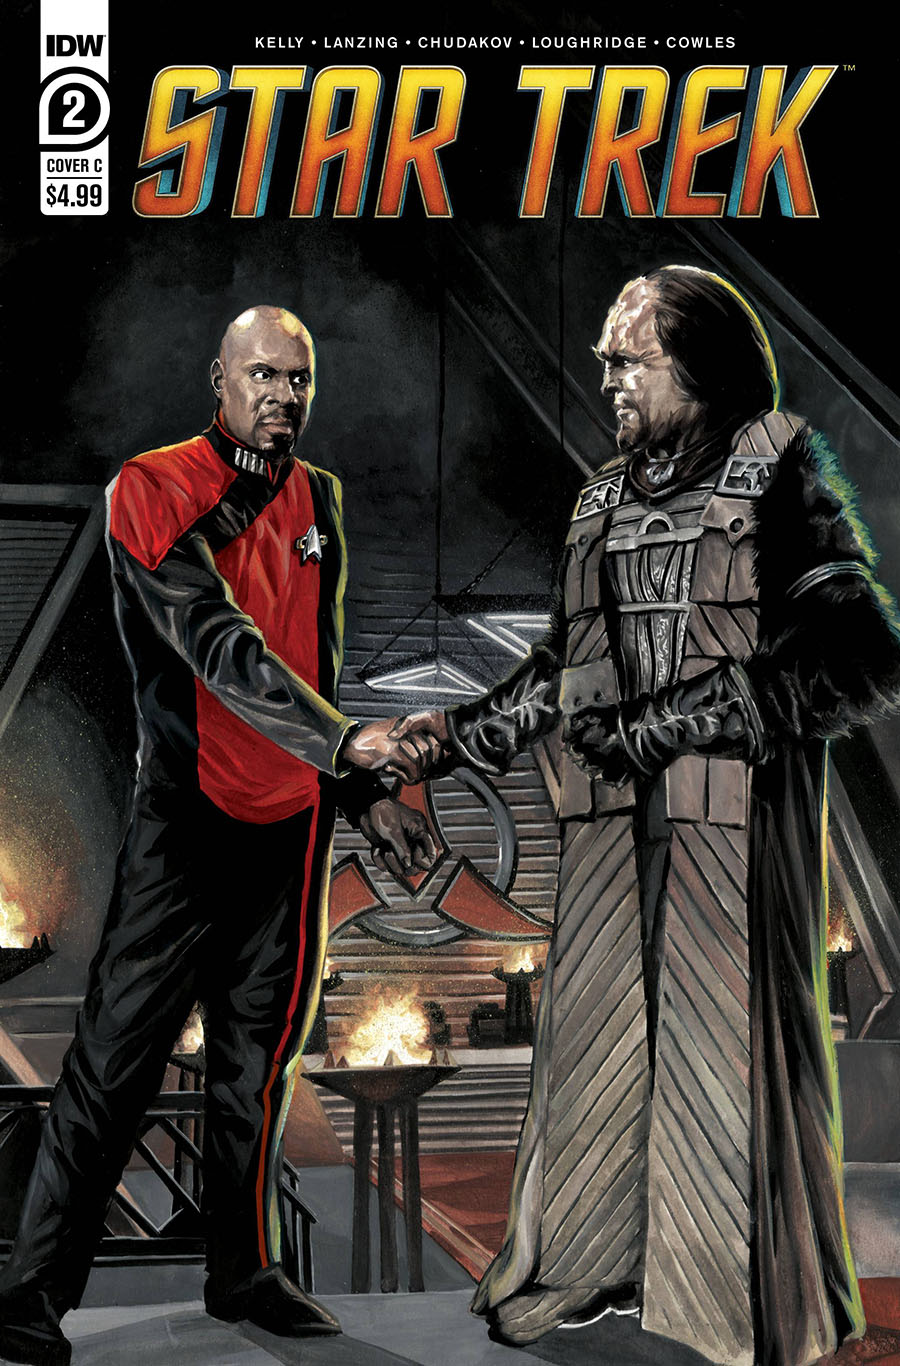 Star Trek (IDW) Vol 2 #2 Cover C Variant JK Woodward Cover